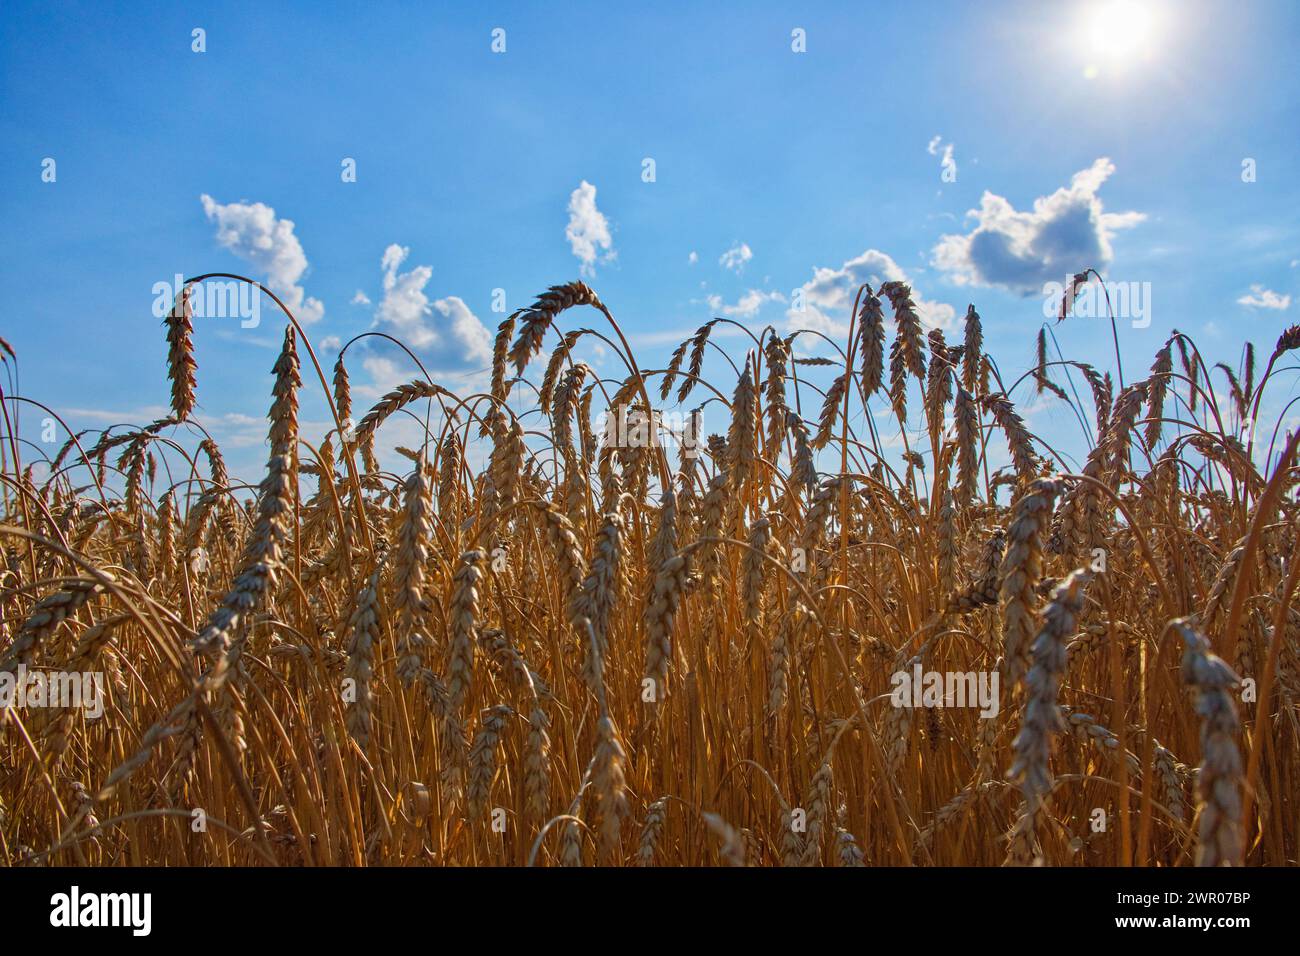 Wheat field under a clear sky, sun highlighting the golden hues. Stock Photo